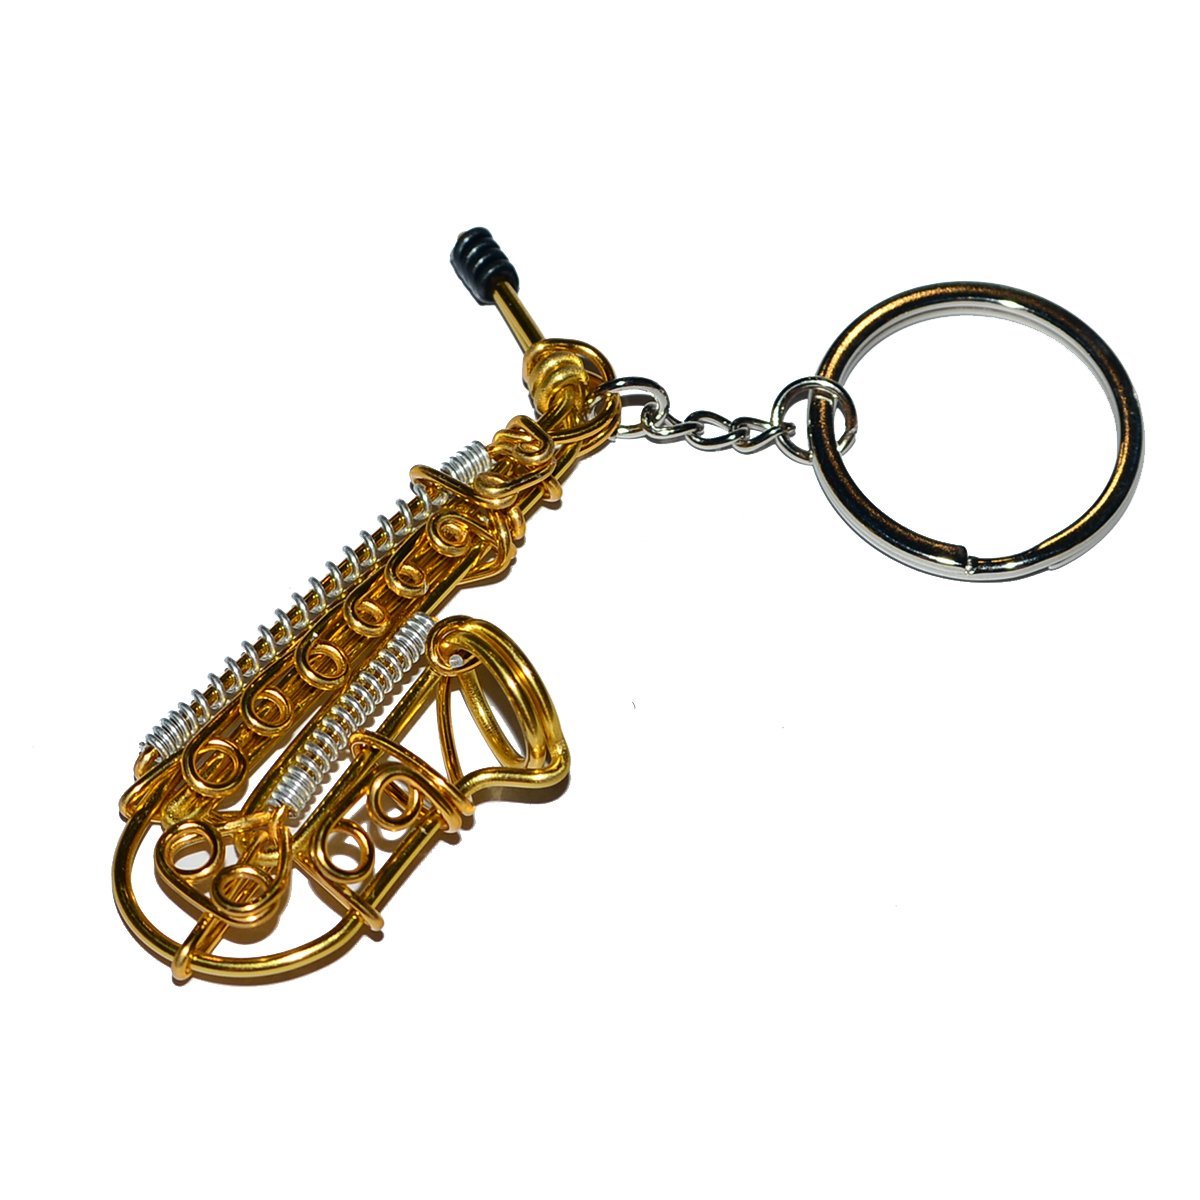 Wire Art Walker - Alto Saxophone Keychain-Accessories-Wire Art Walker-Music Elements